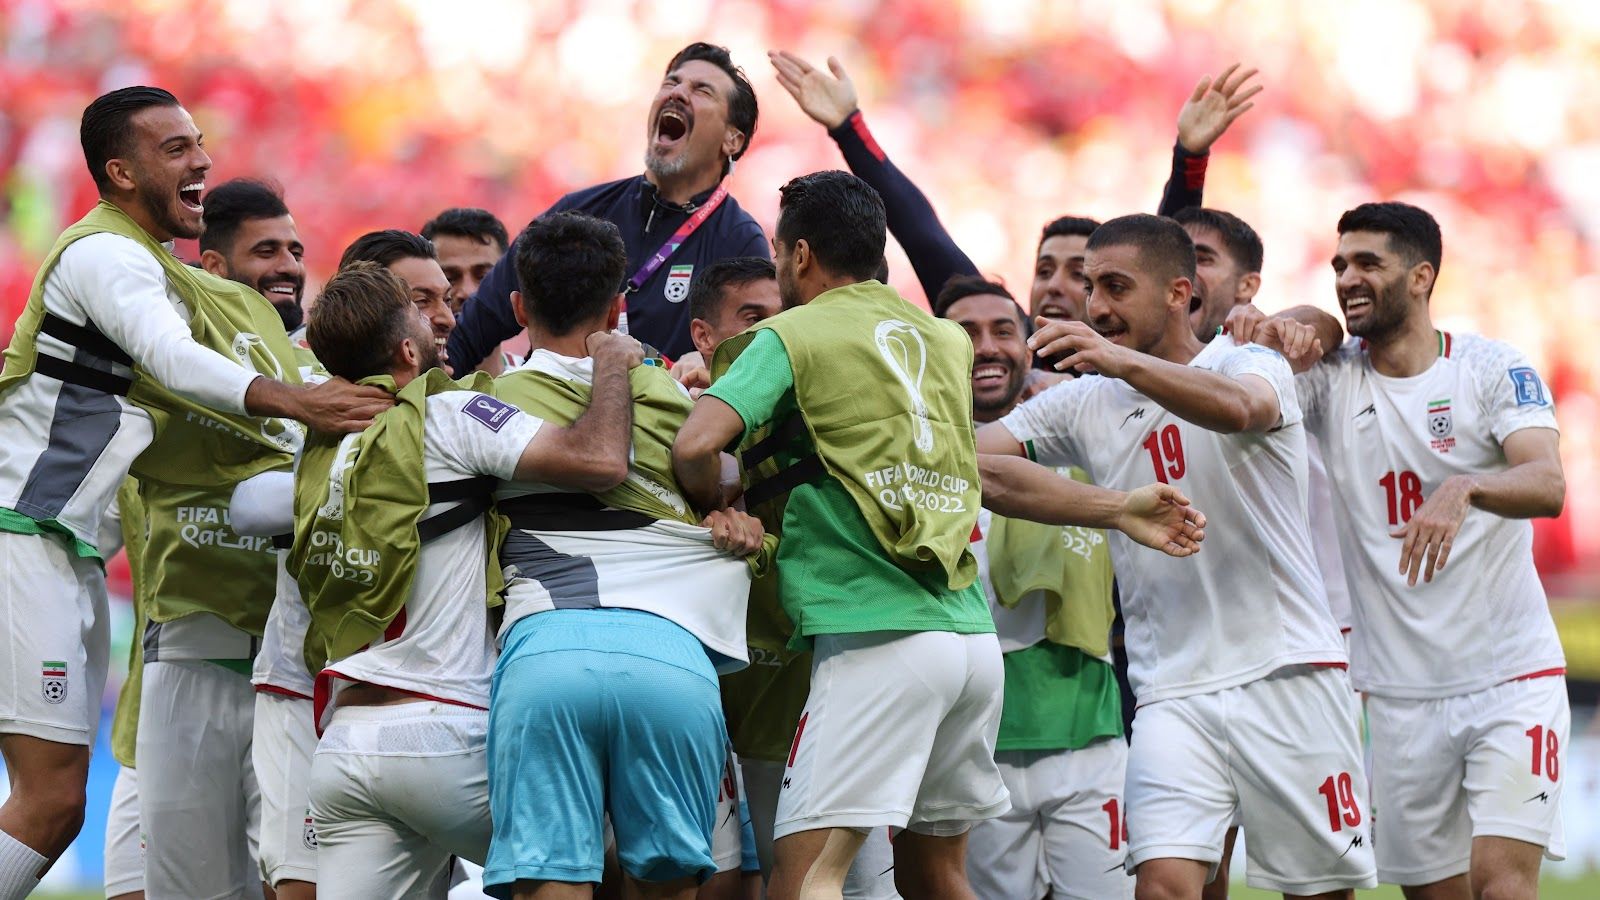 Iran vs USA, November 29: Head-to-Head Statistics, Line-ups, Prediction for the 2022 World Cup Match